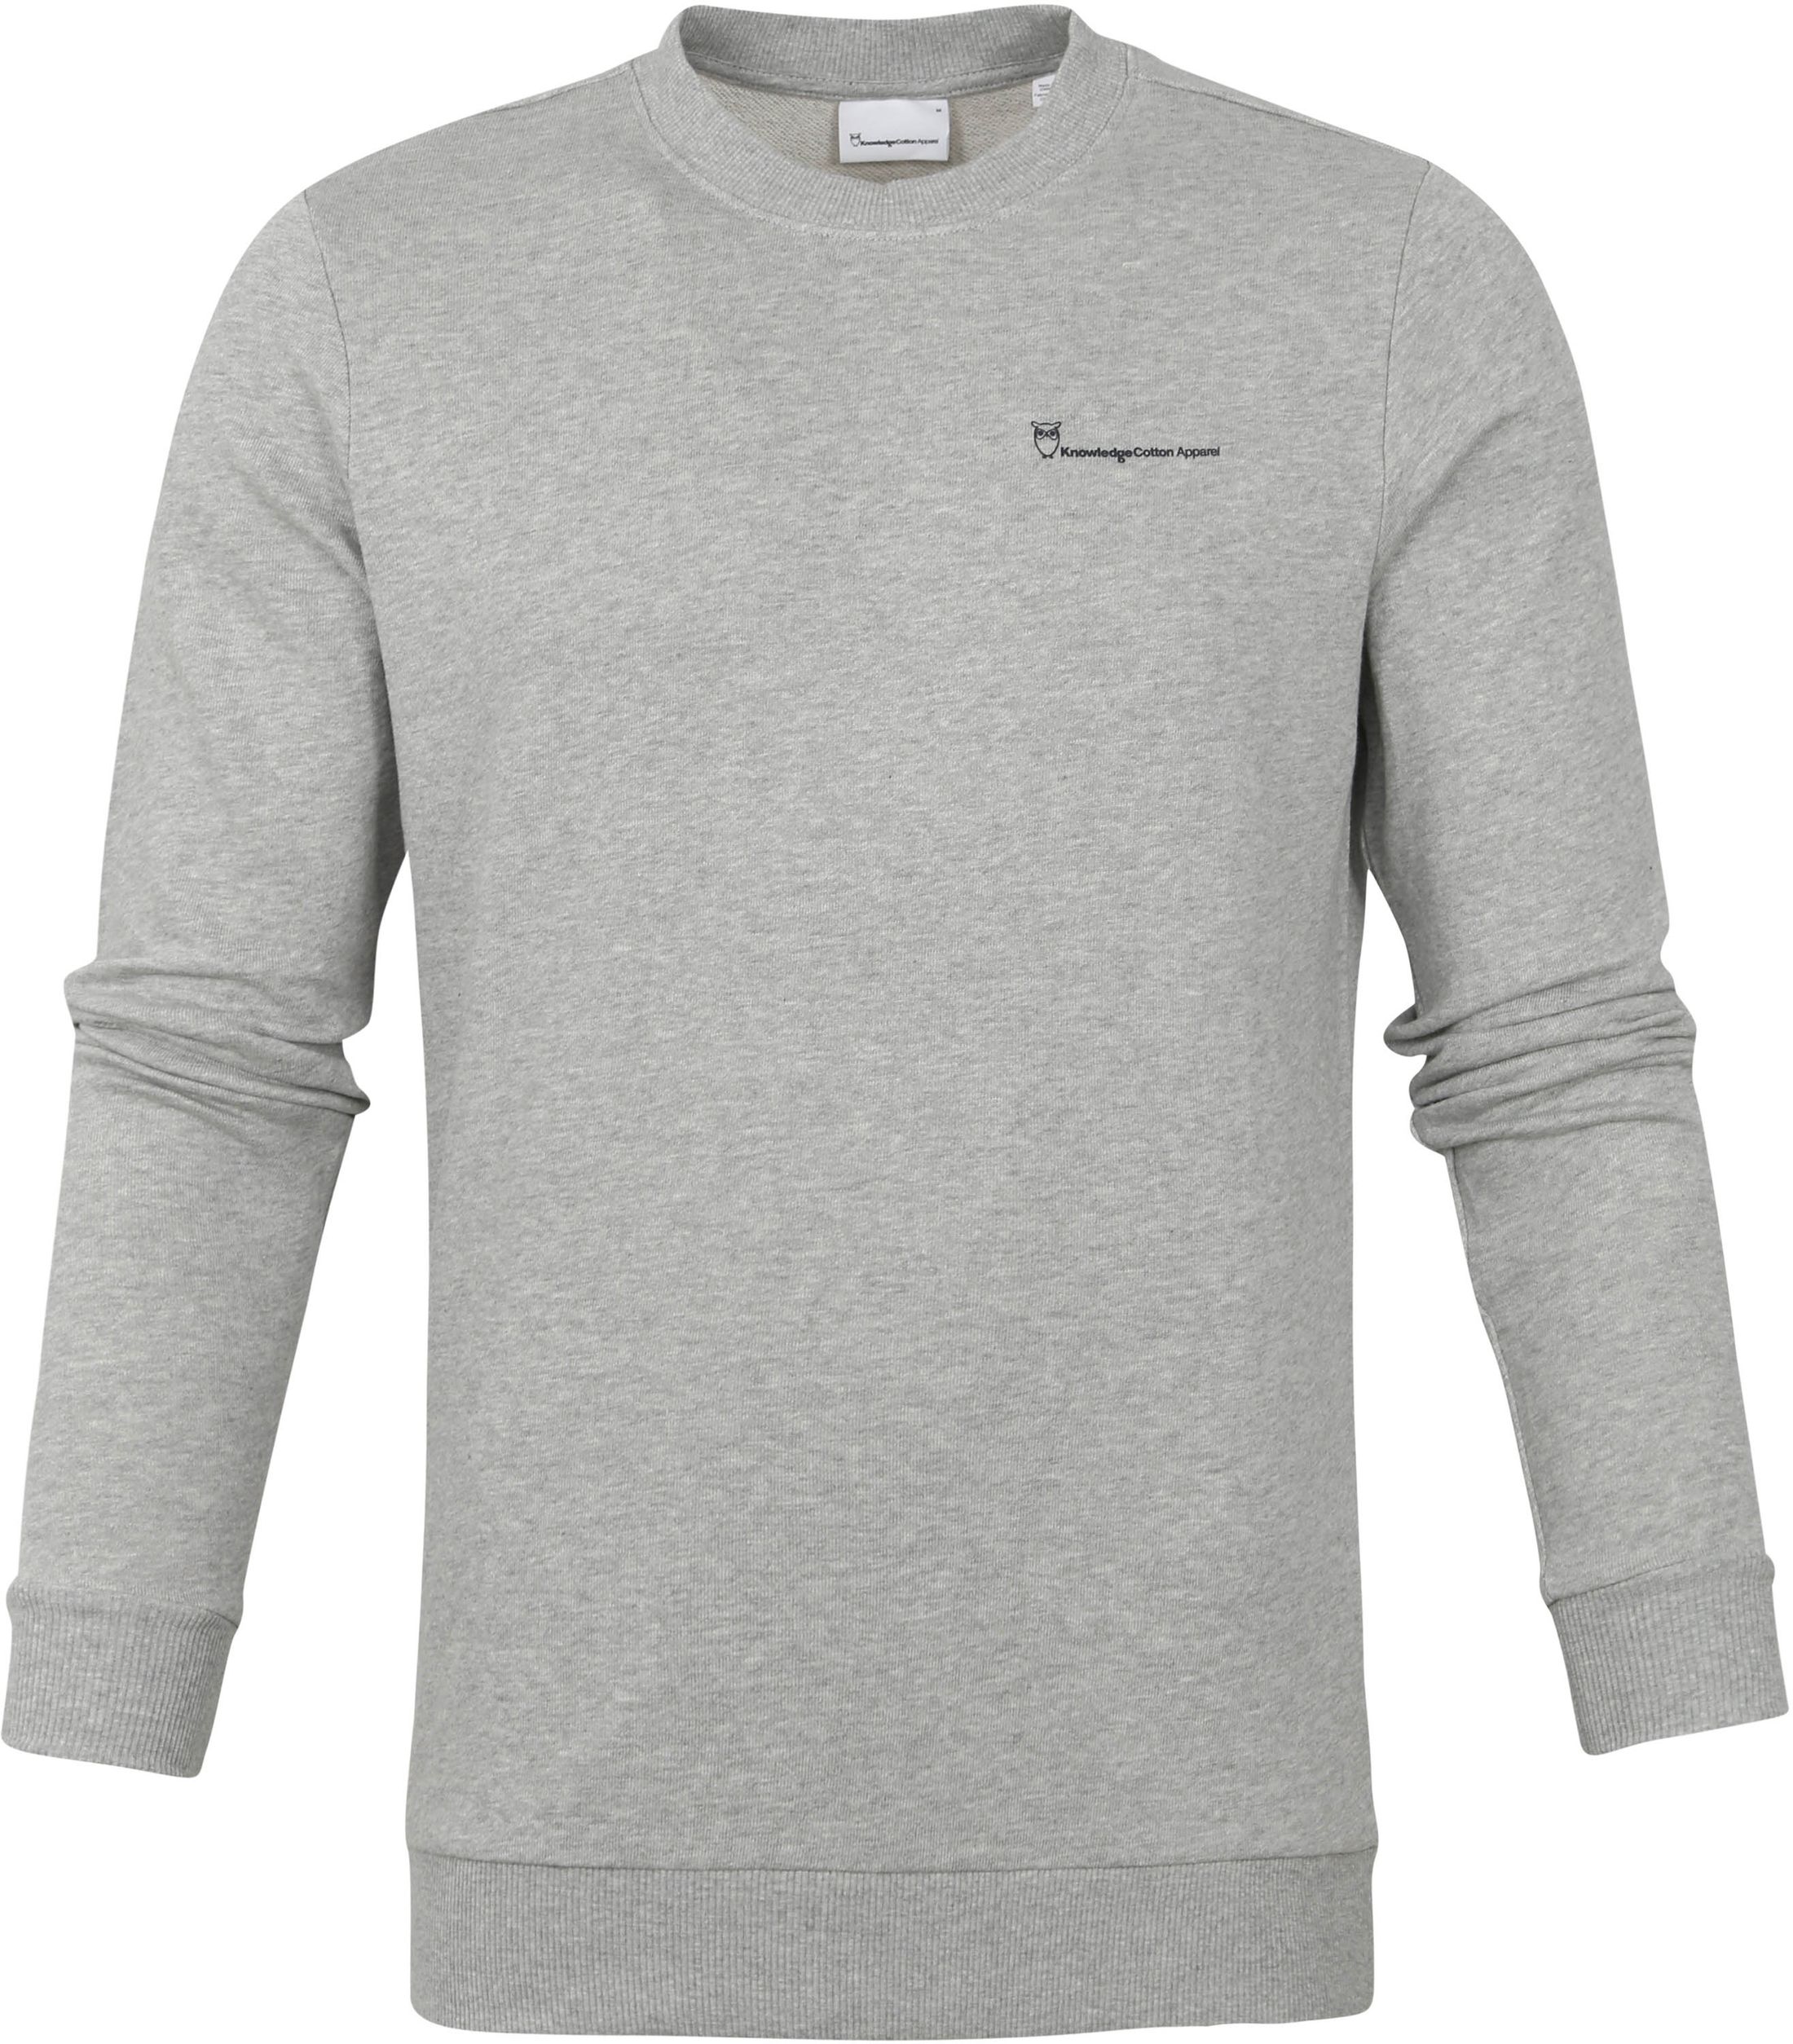 KnowledgeCotton Apparel Elm Sweater Grey size XL